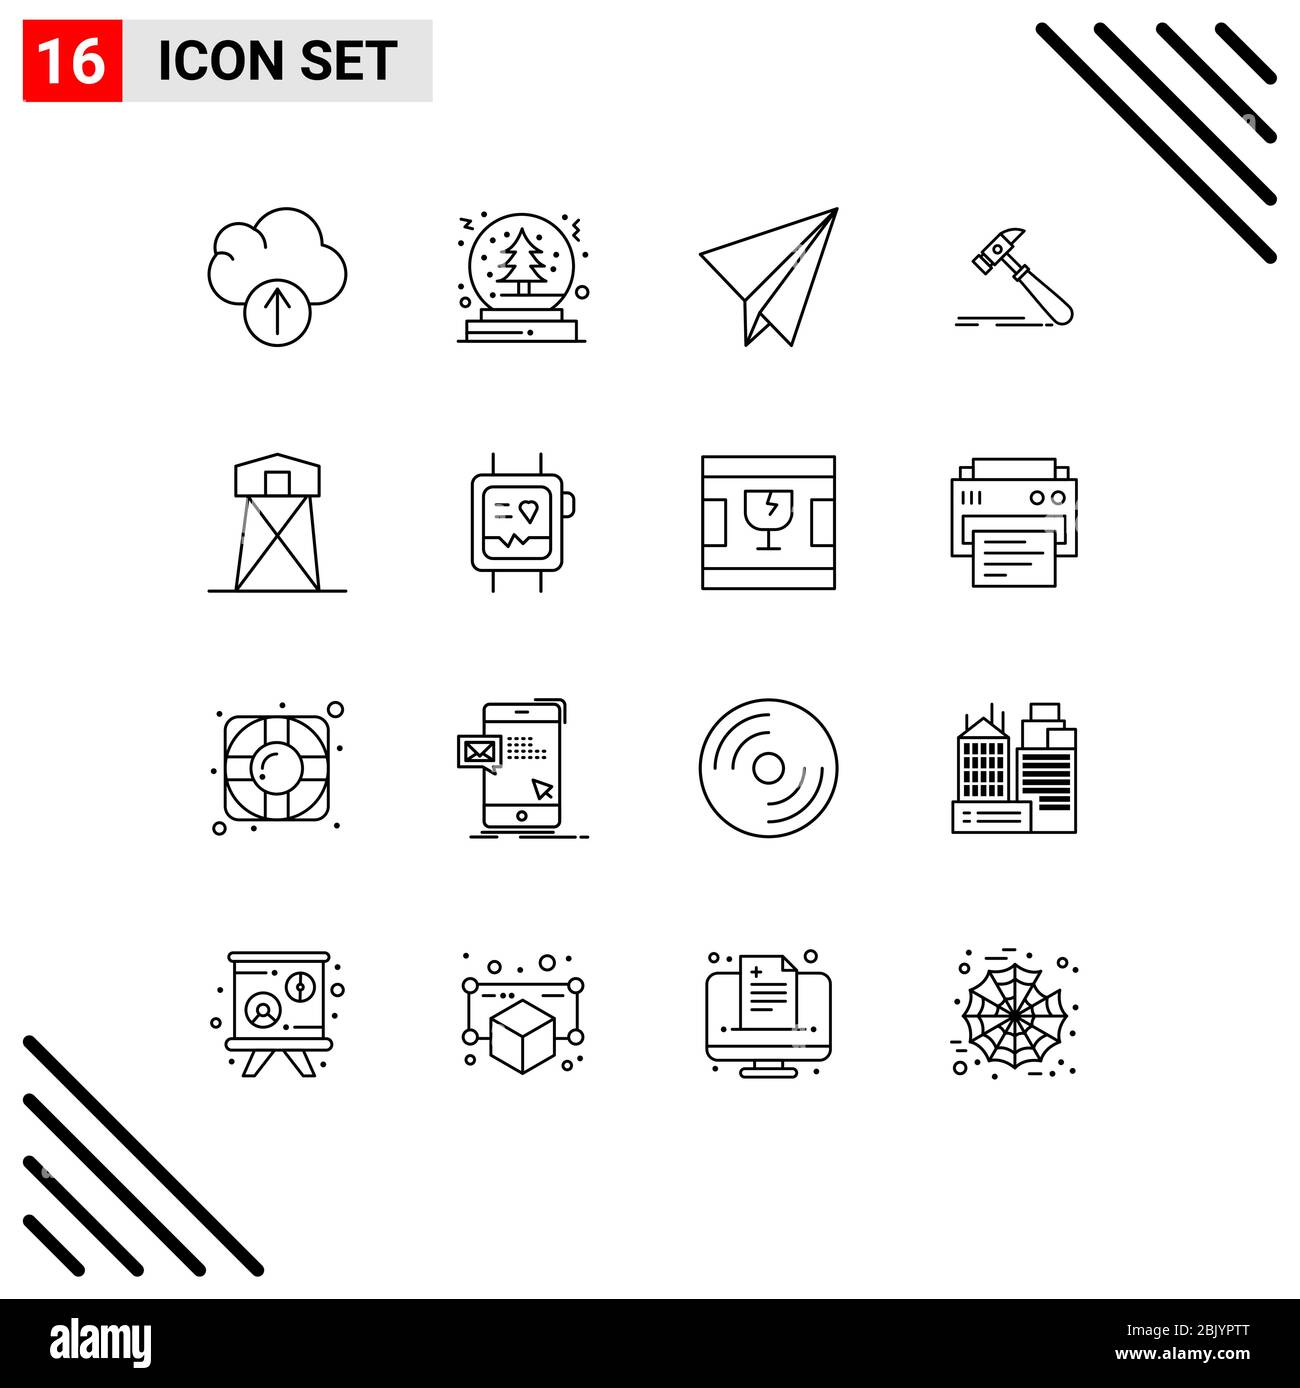 Set of 16 Modern UI Icons Symbols Signs for hunt, defense, paper plane, carpenter, tool Editable Vector Design Elements Stock Vector